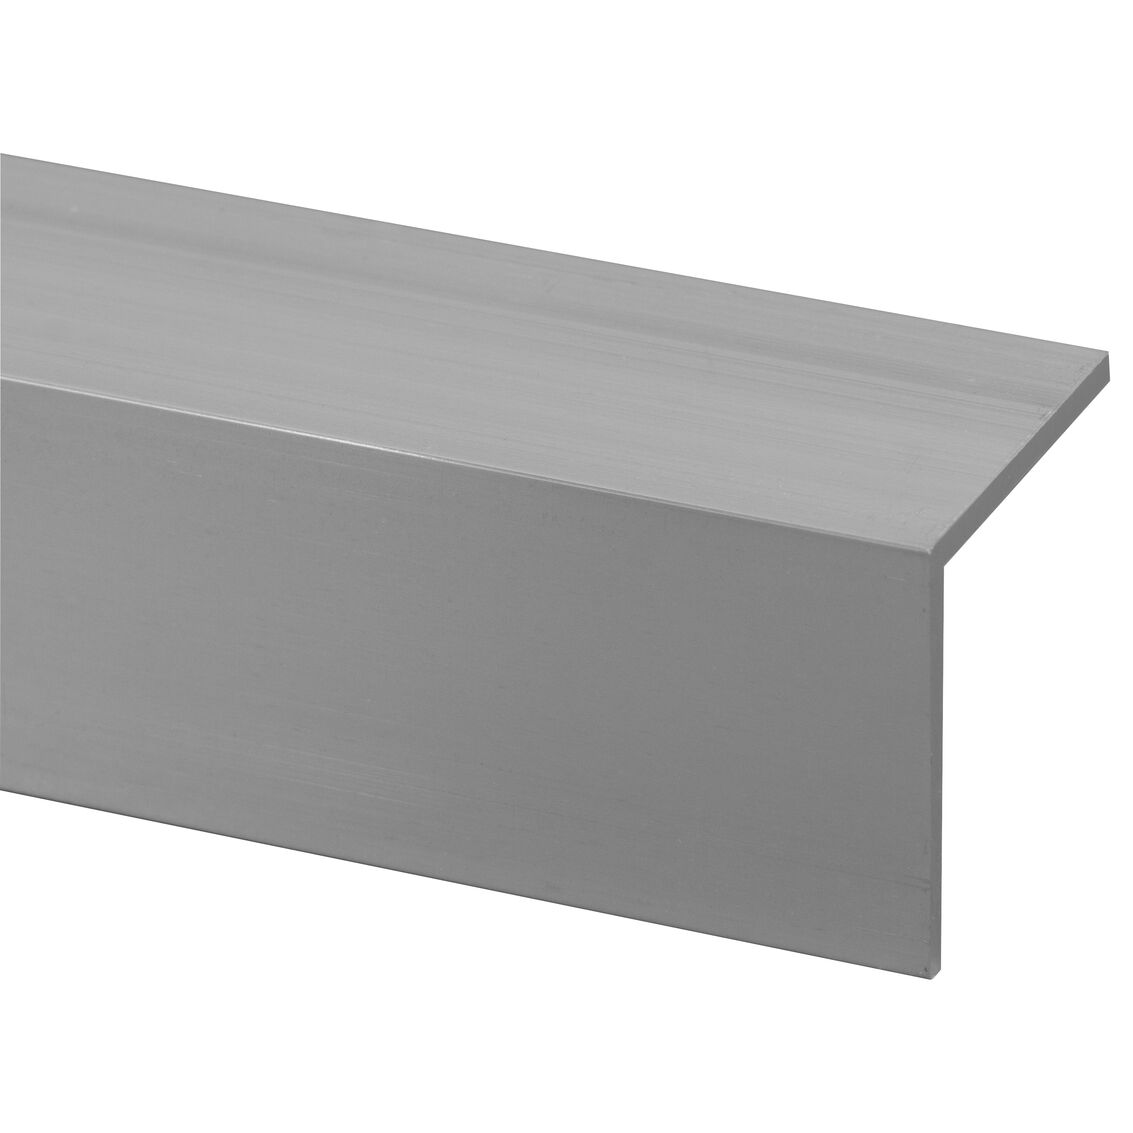 aluminium 40x40mm 200cm | PontMeyer